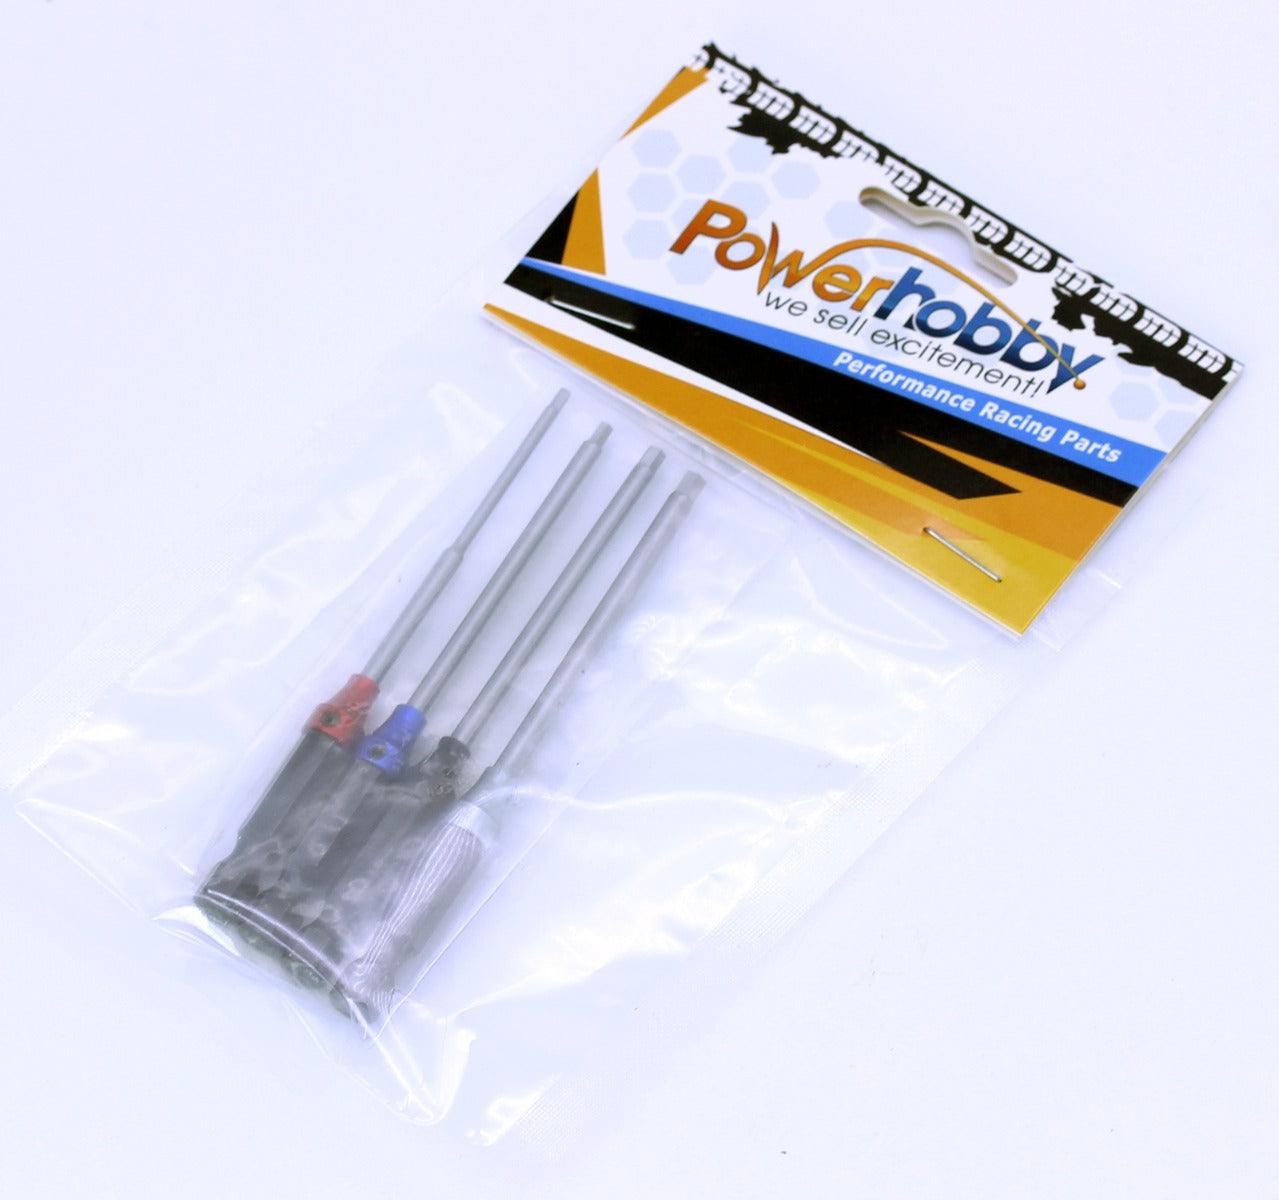 Powerhobby RC Hex Driver 1/4" Power Tool Set Metric 1.5, 2.0, 2.5, 3.0mm - PowerHobby